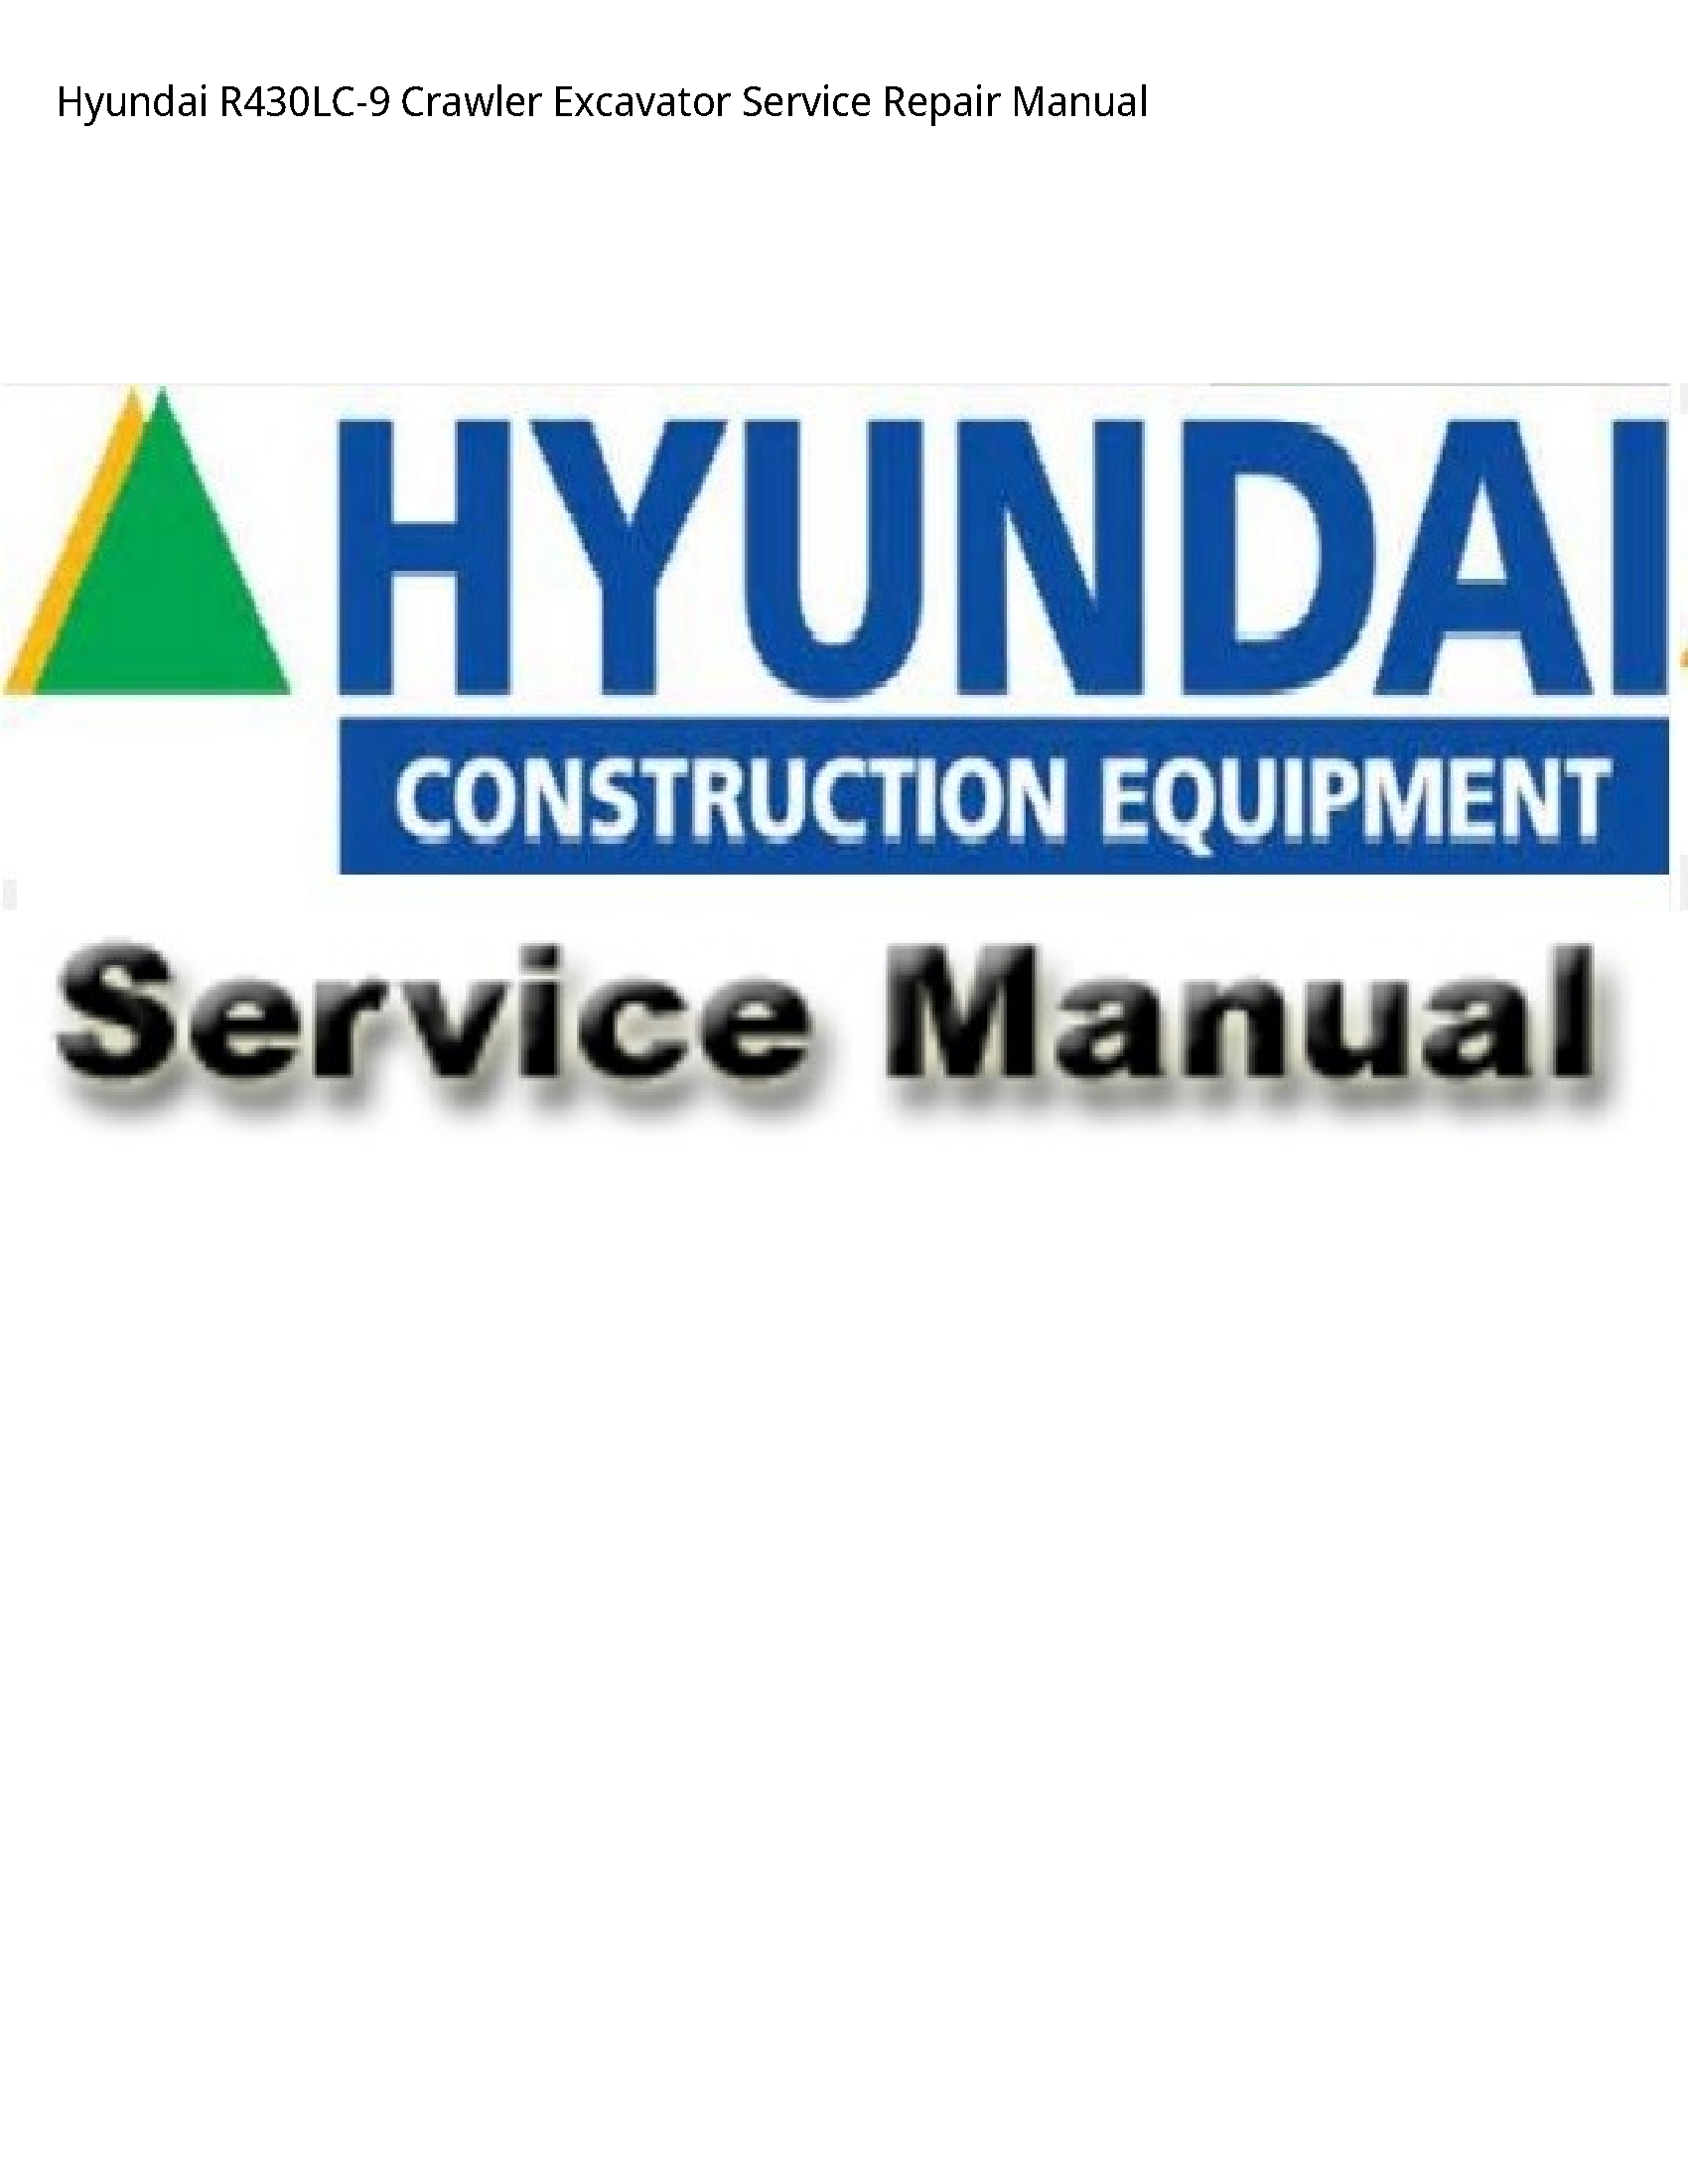 Hyundai R430LC-9 Crawler Excavator manual